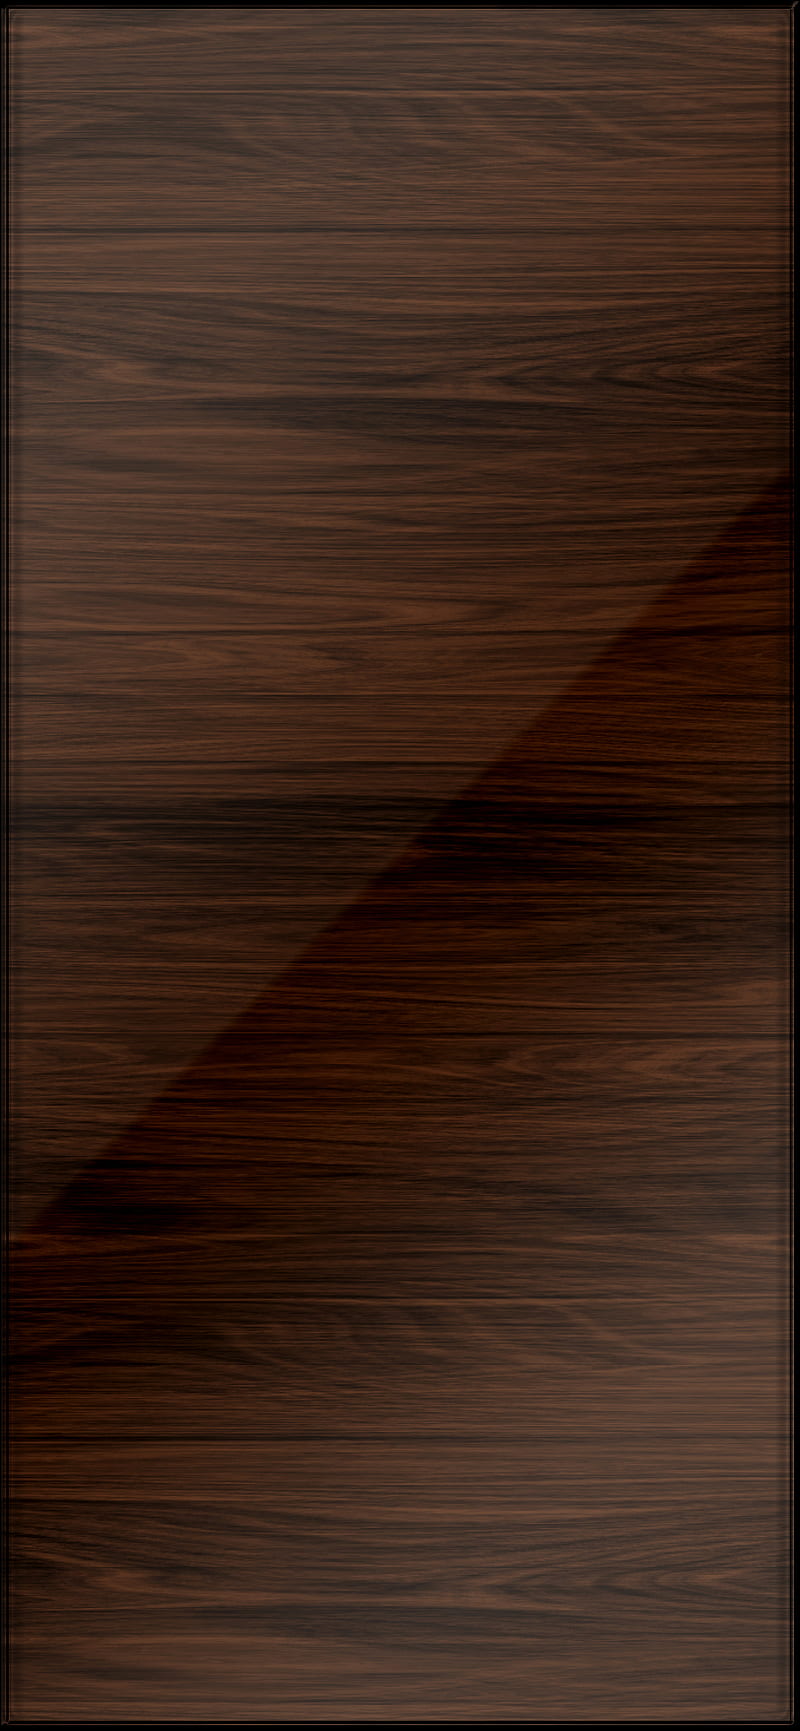 Best Wood iPhone HD Wallpapers  iLikeWallpaper